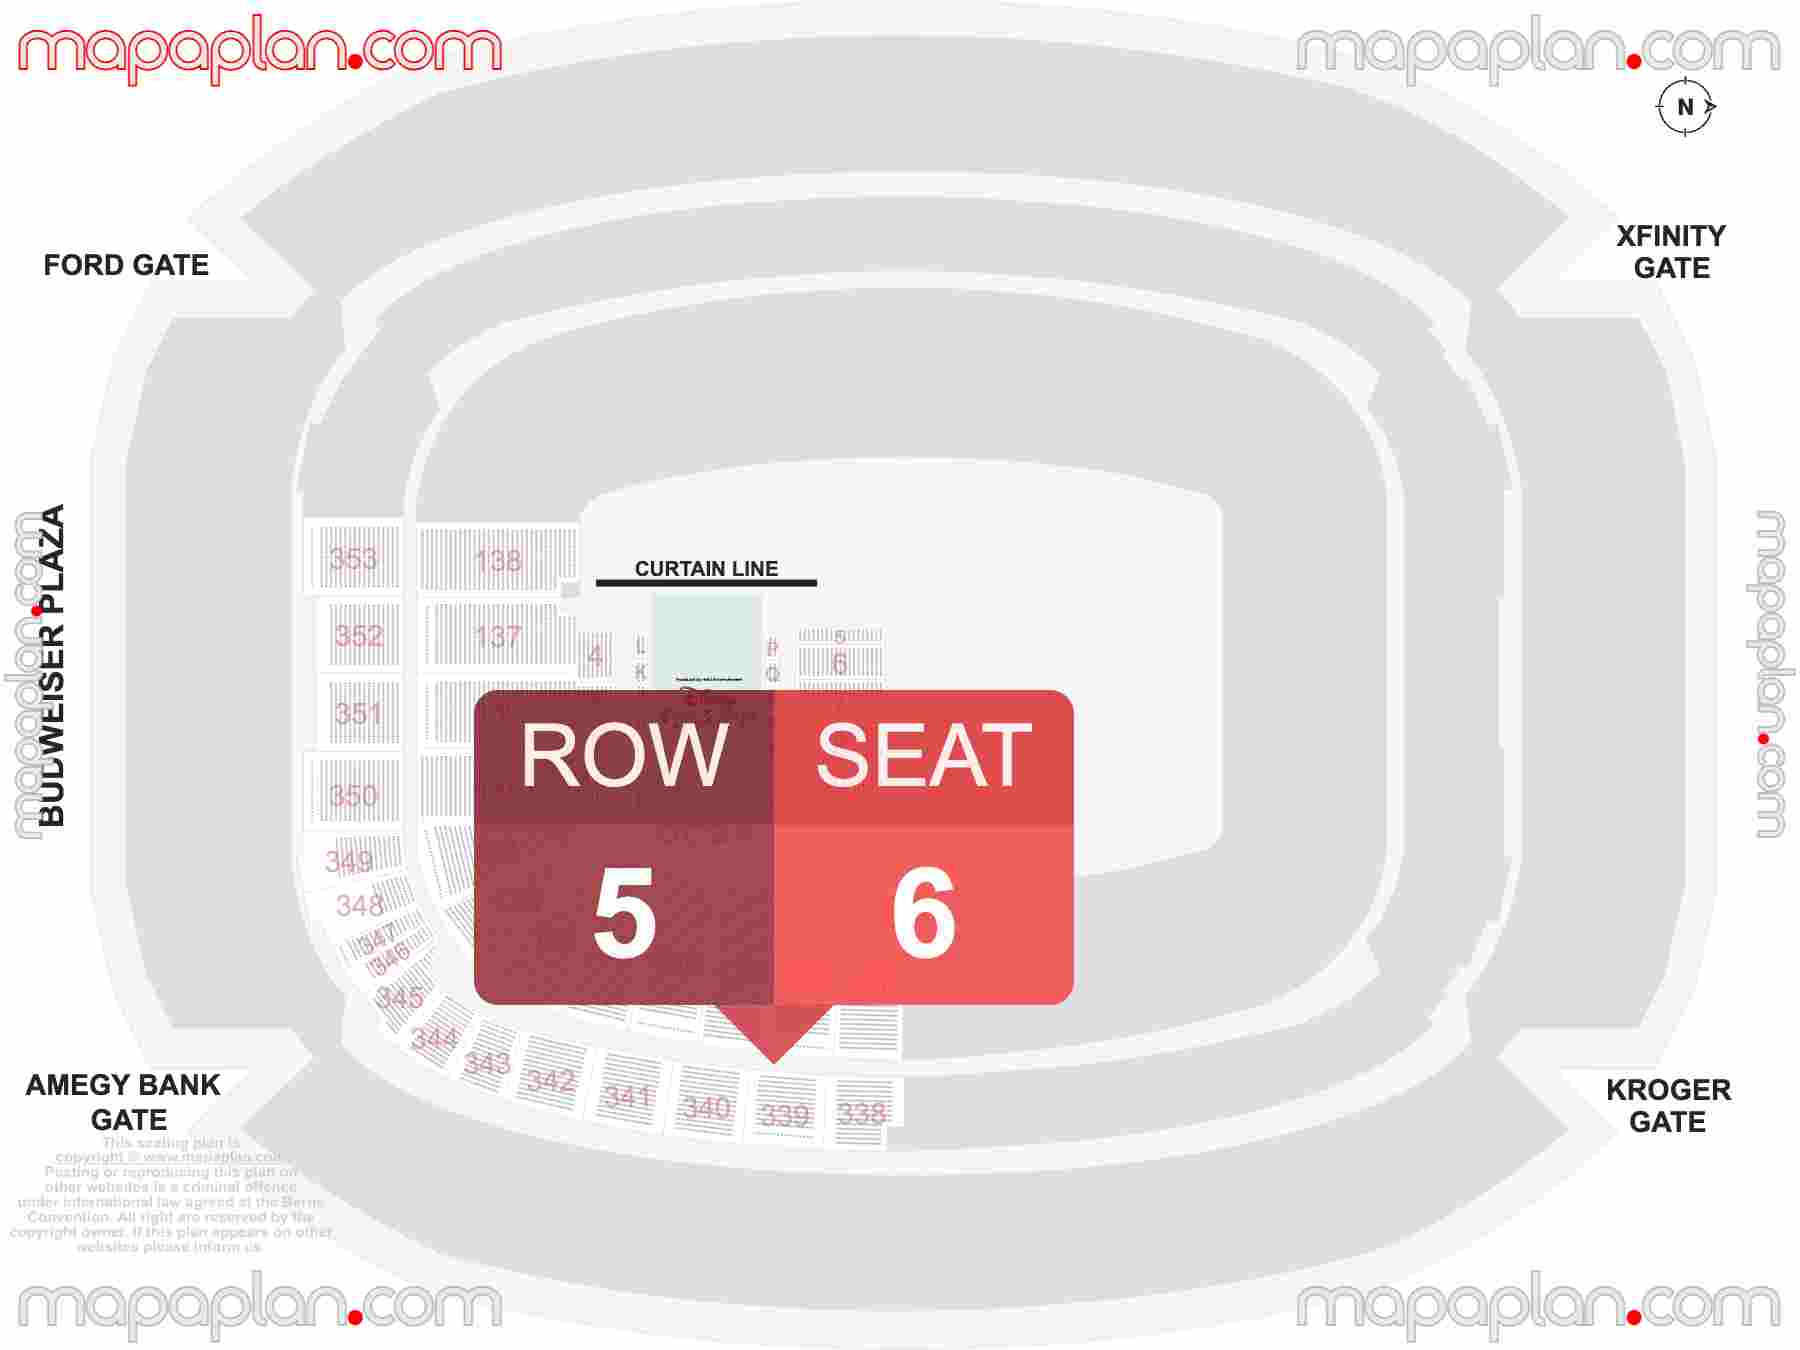 Houston NRG Stadium seating chart Disney on Ice inside capacity view arrangement plan - Interactive virtual 3d best seats & rows detailed stadium image configuration layout